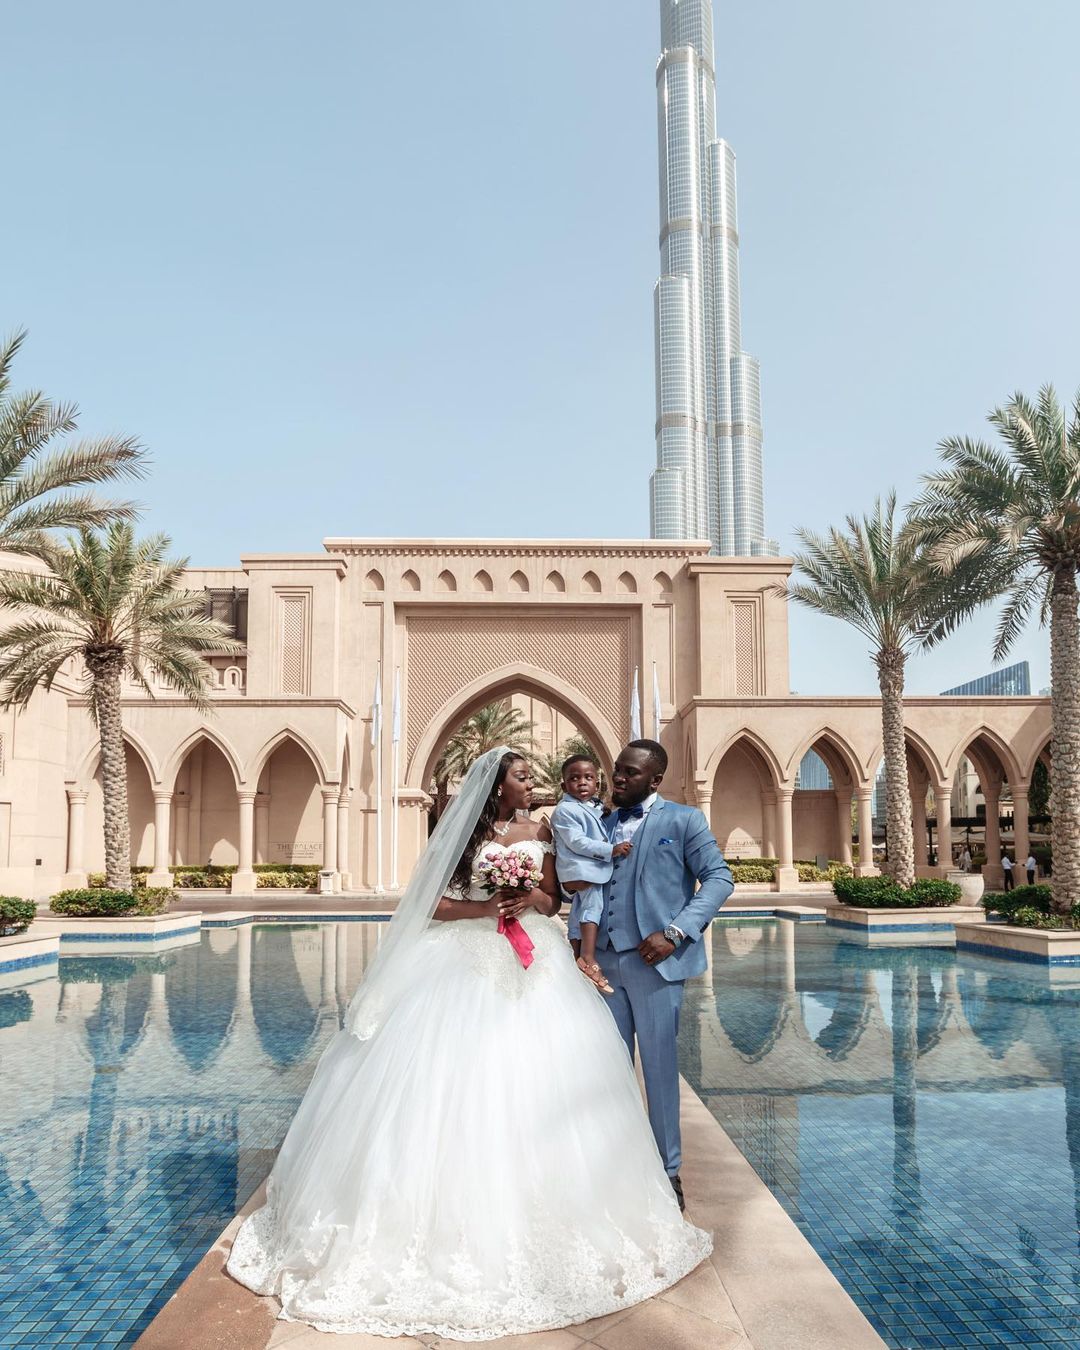 Book Dubai Wedding Photography Service. Hire Professional Wedding Photographer. Contact DubaiContent.Pro